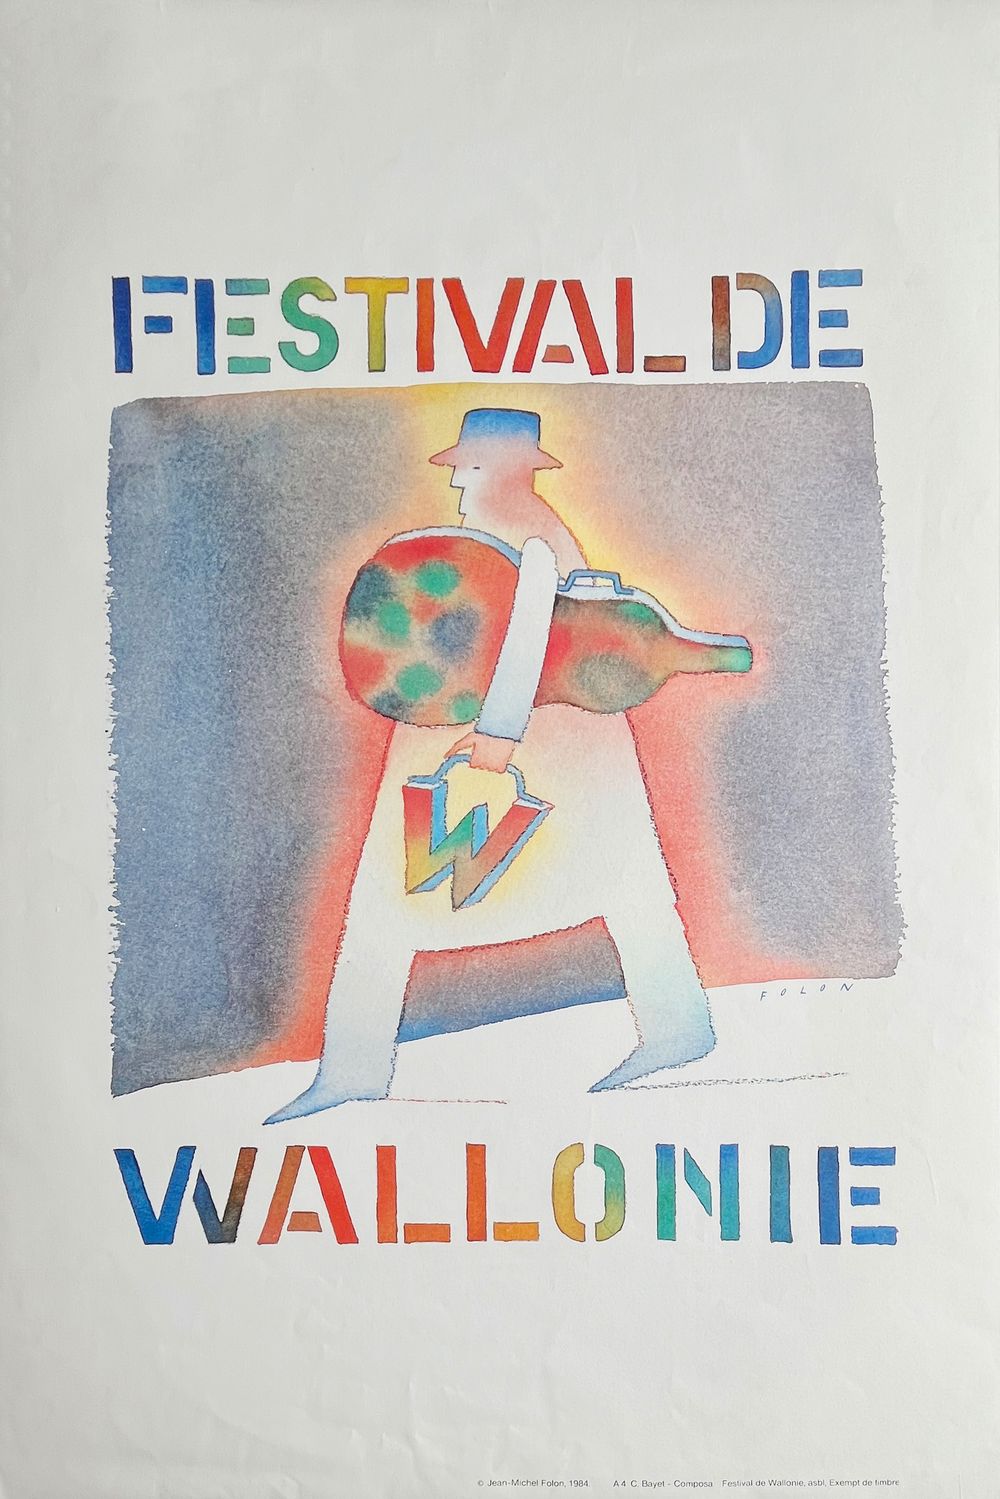 Expo 1984 - Festival de Wallonie